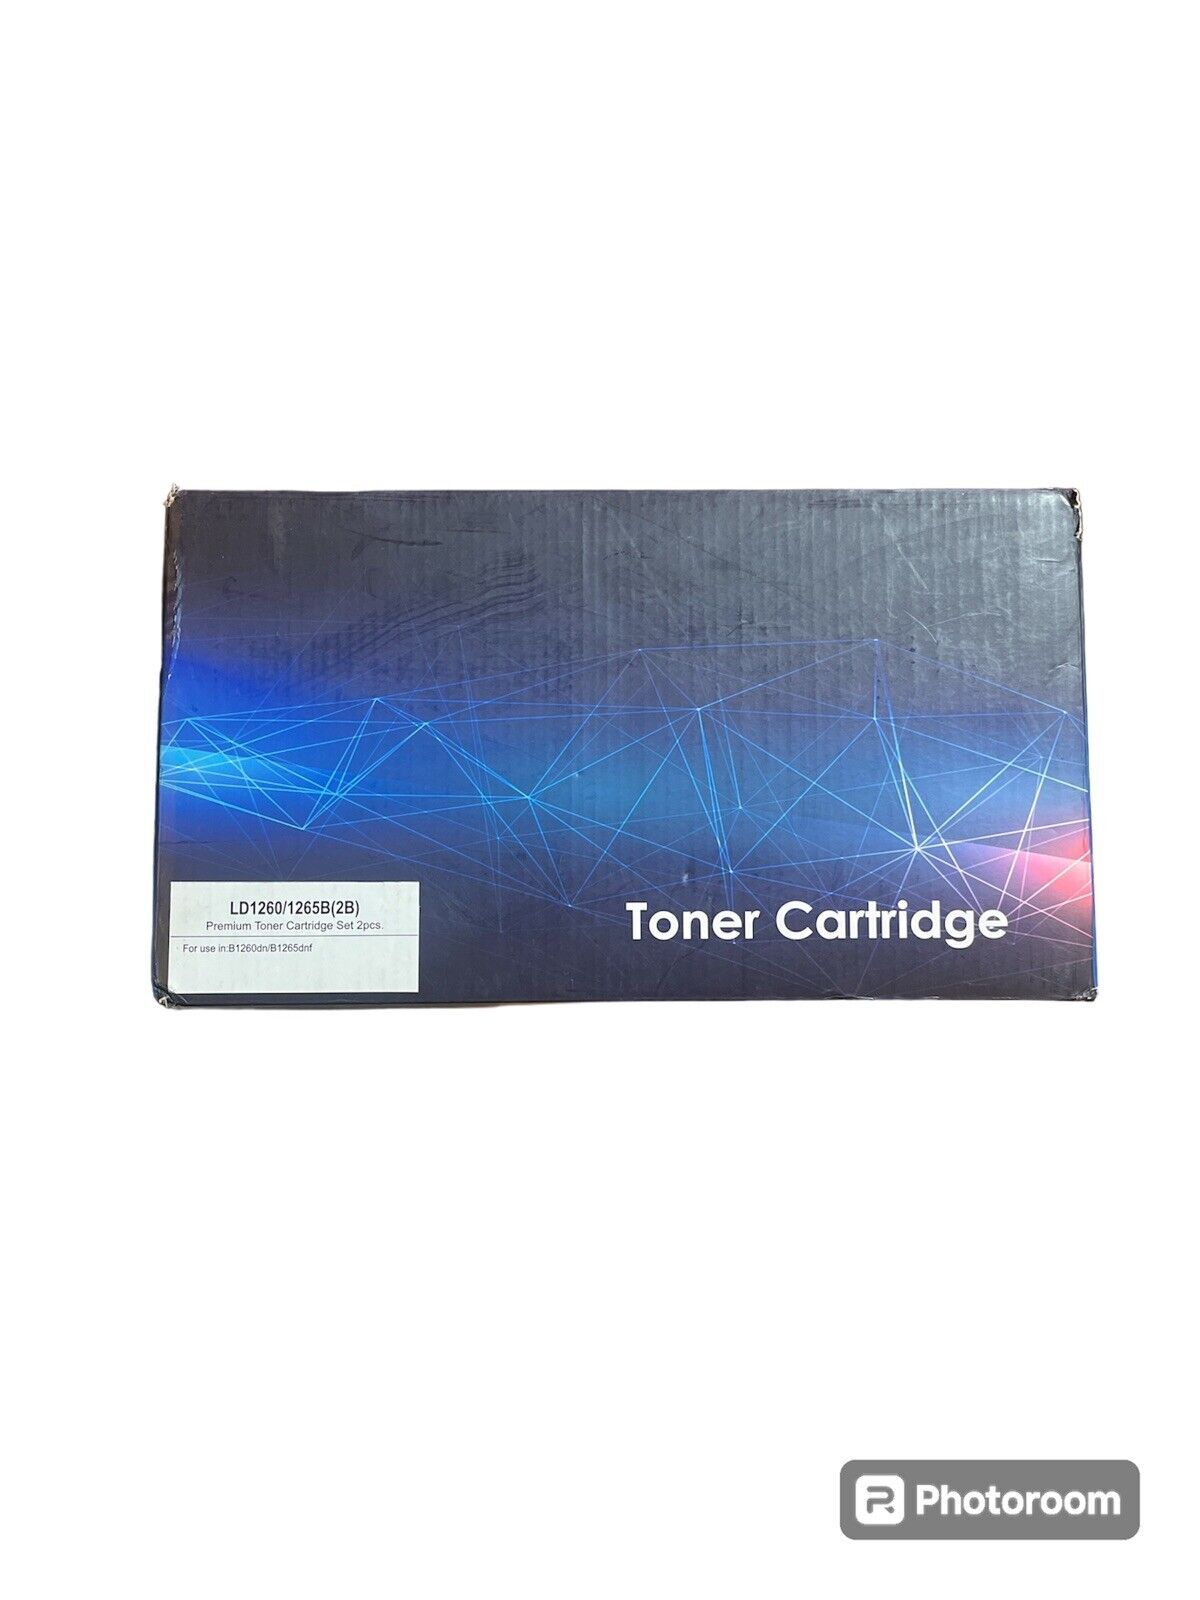 LD Toner Cartridge Toner Cartridge Replacement Black